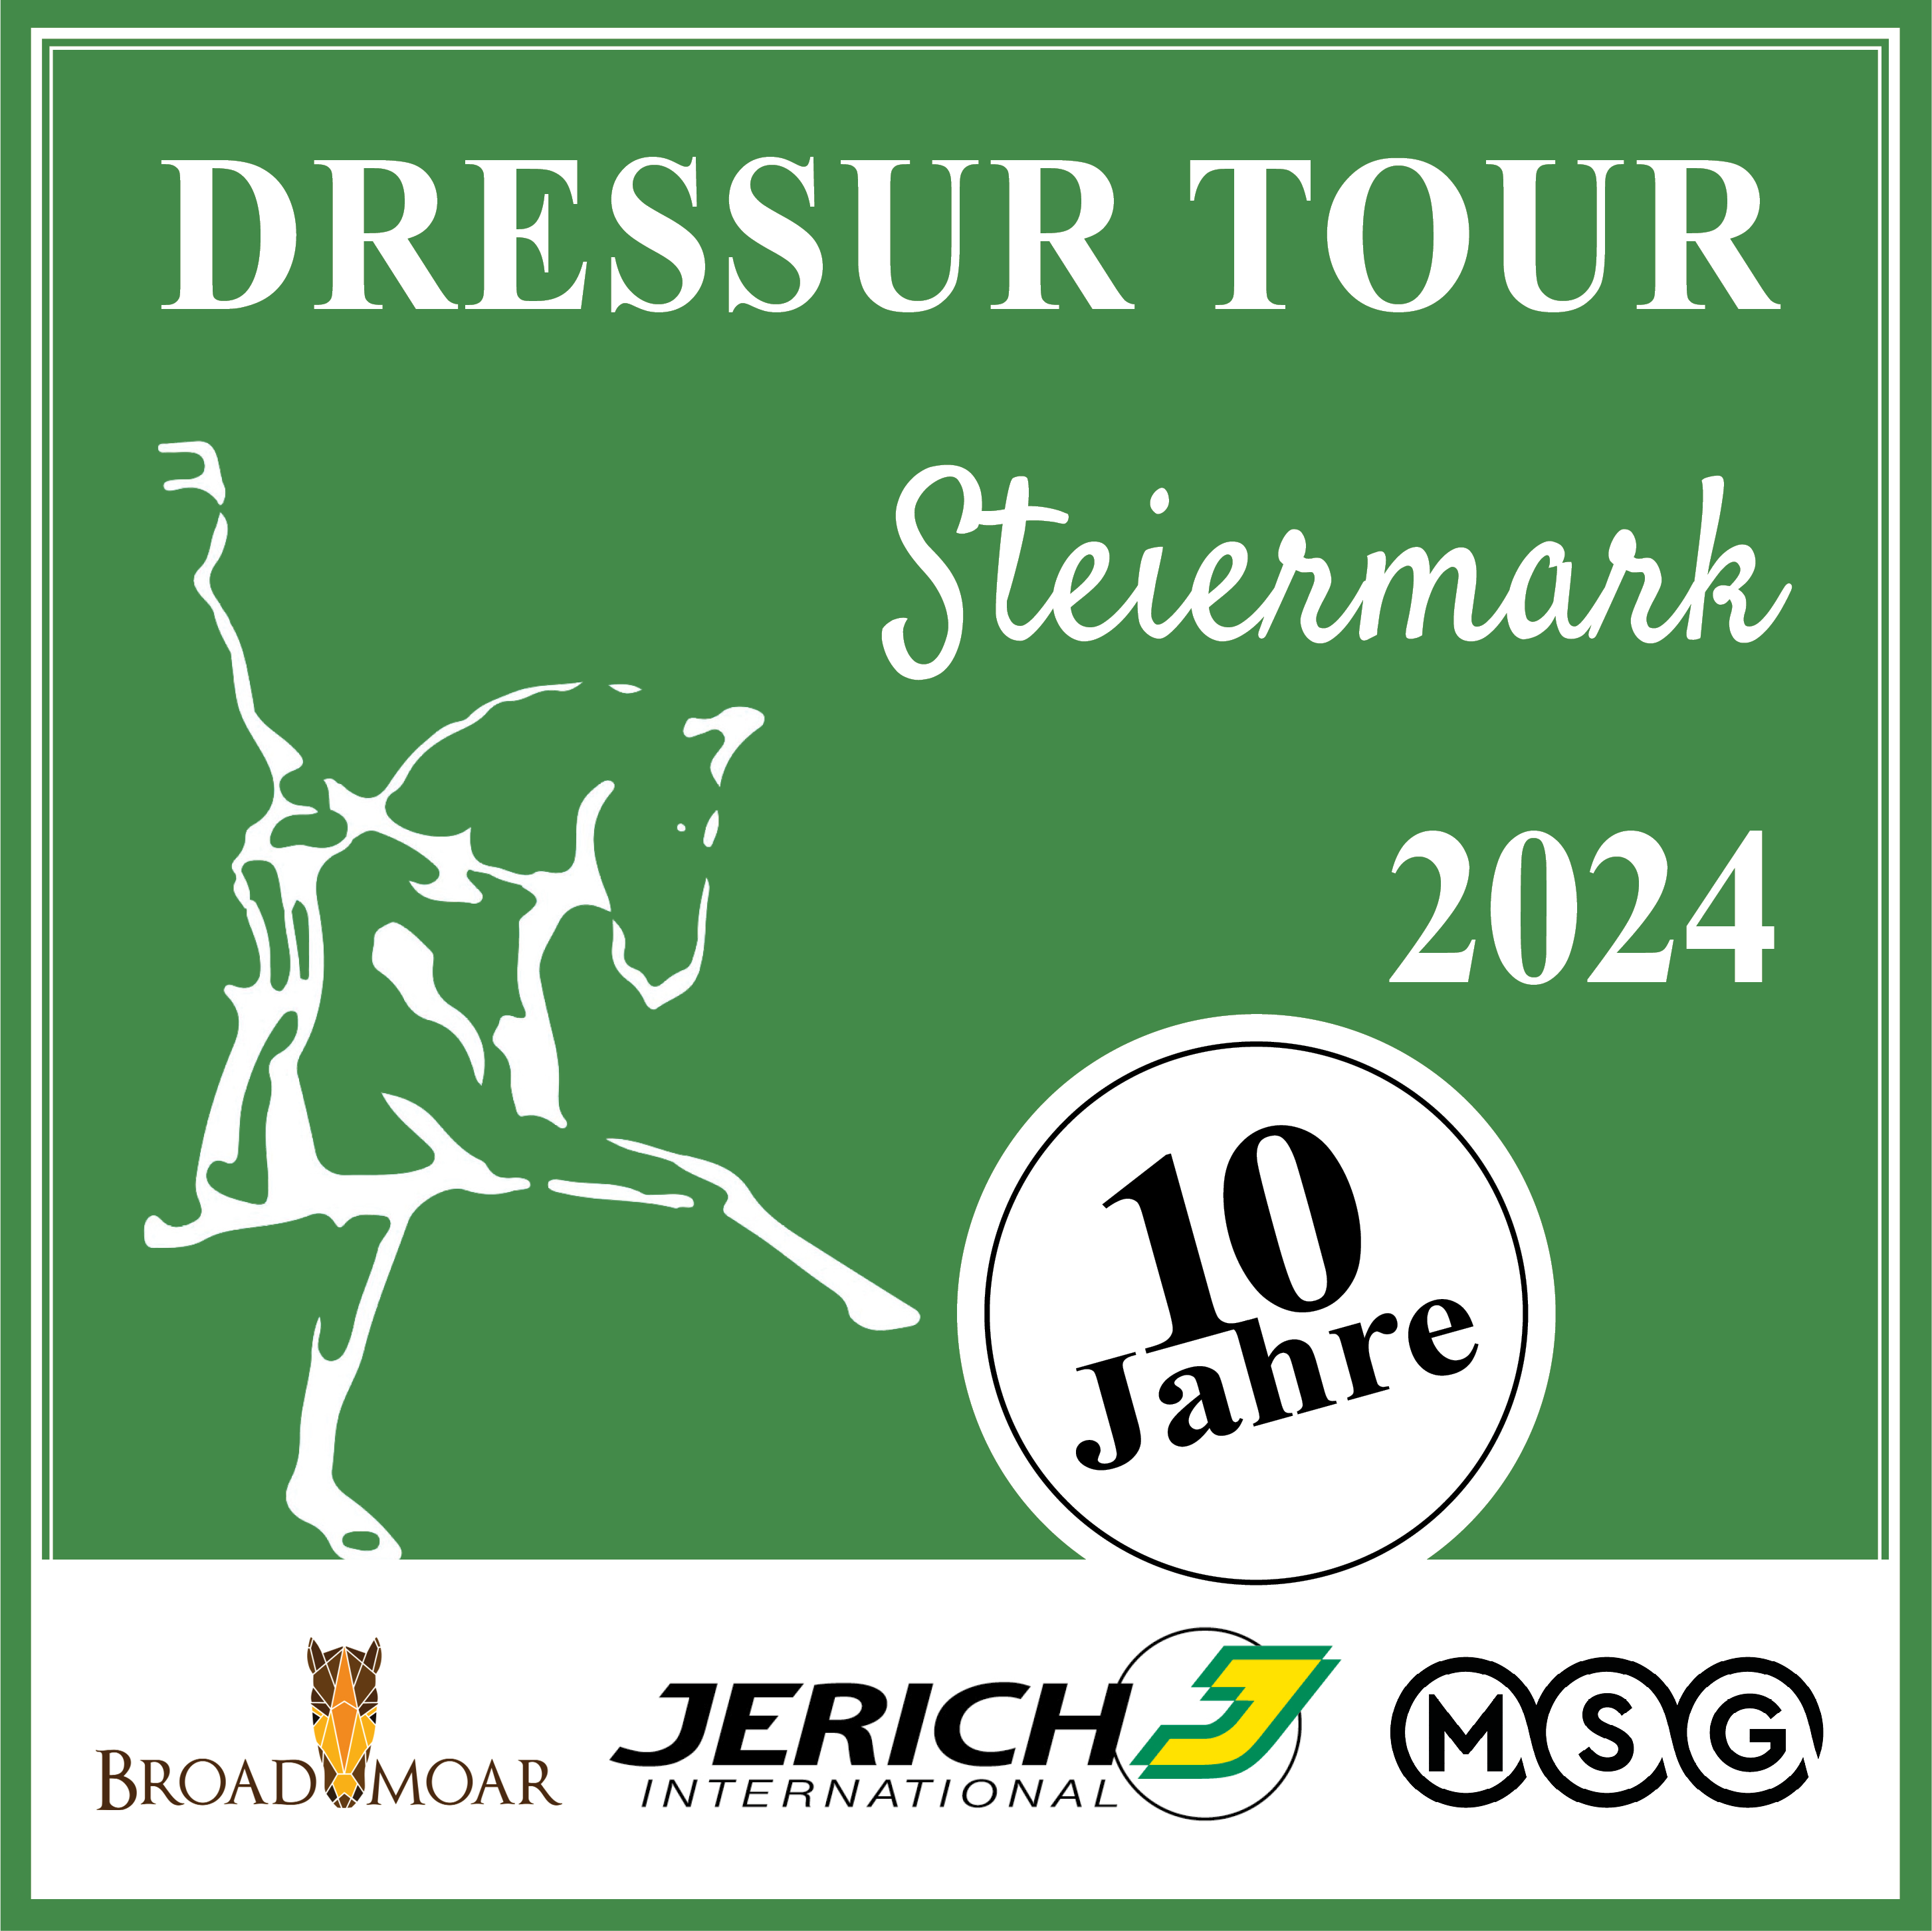 Dressur Tour Steiermark 2024